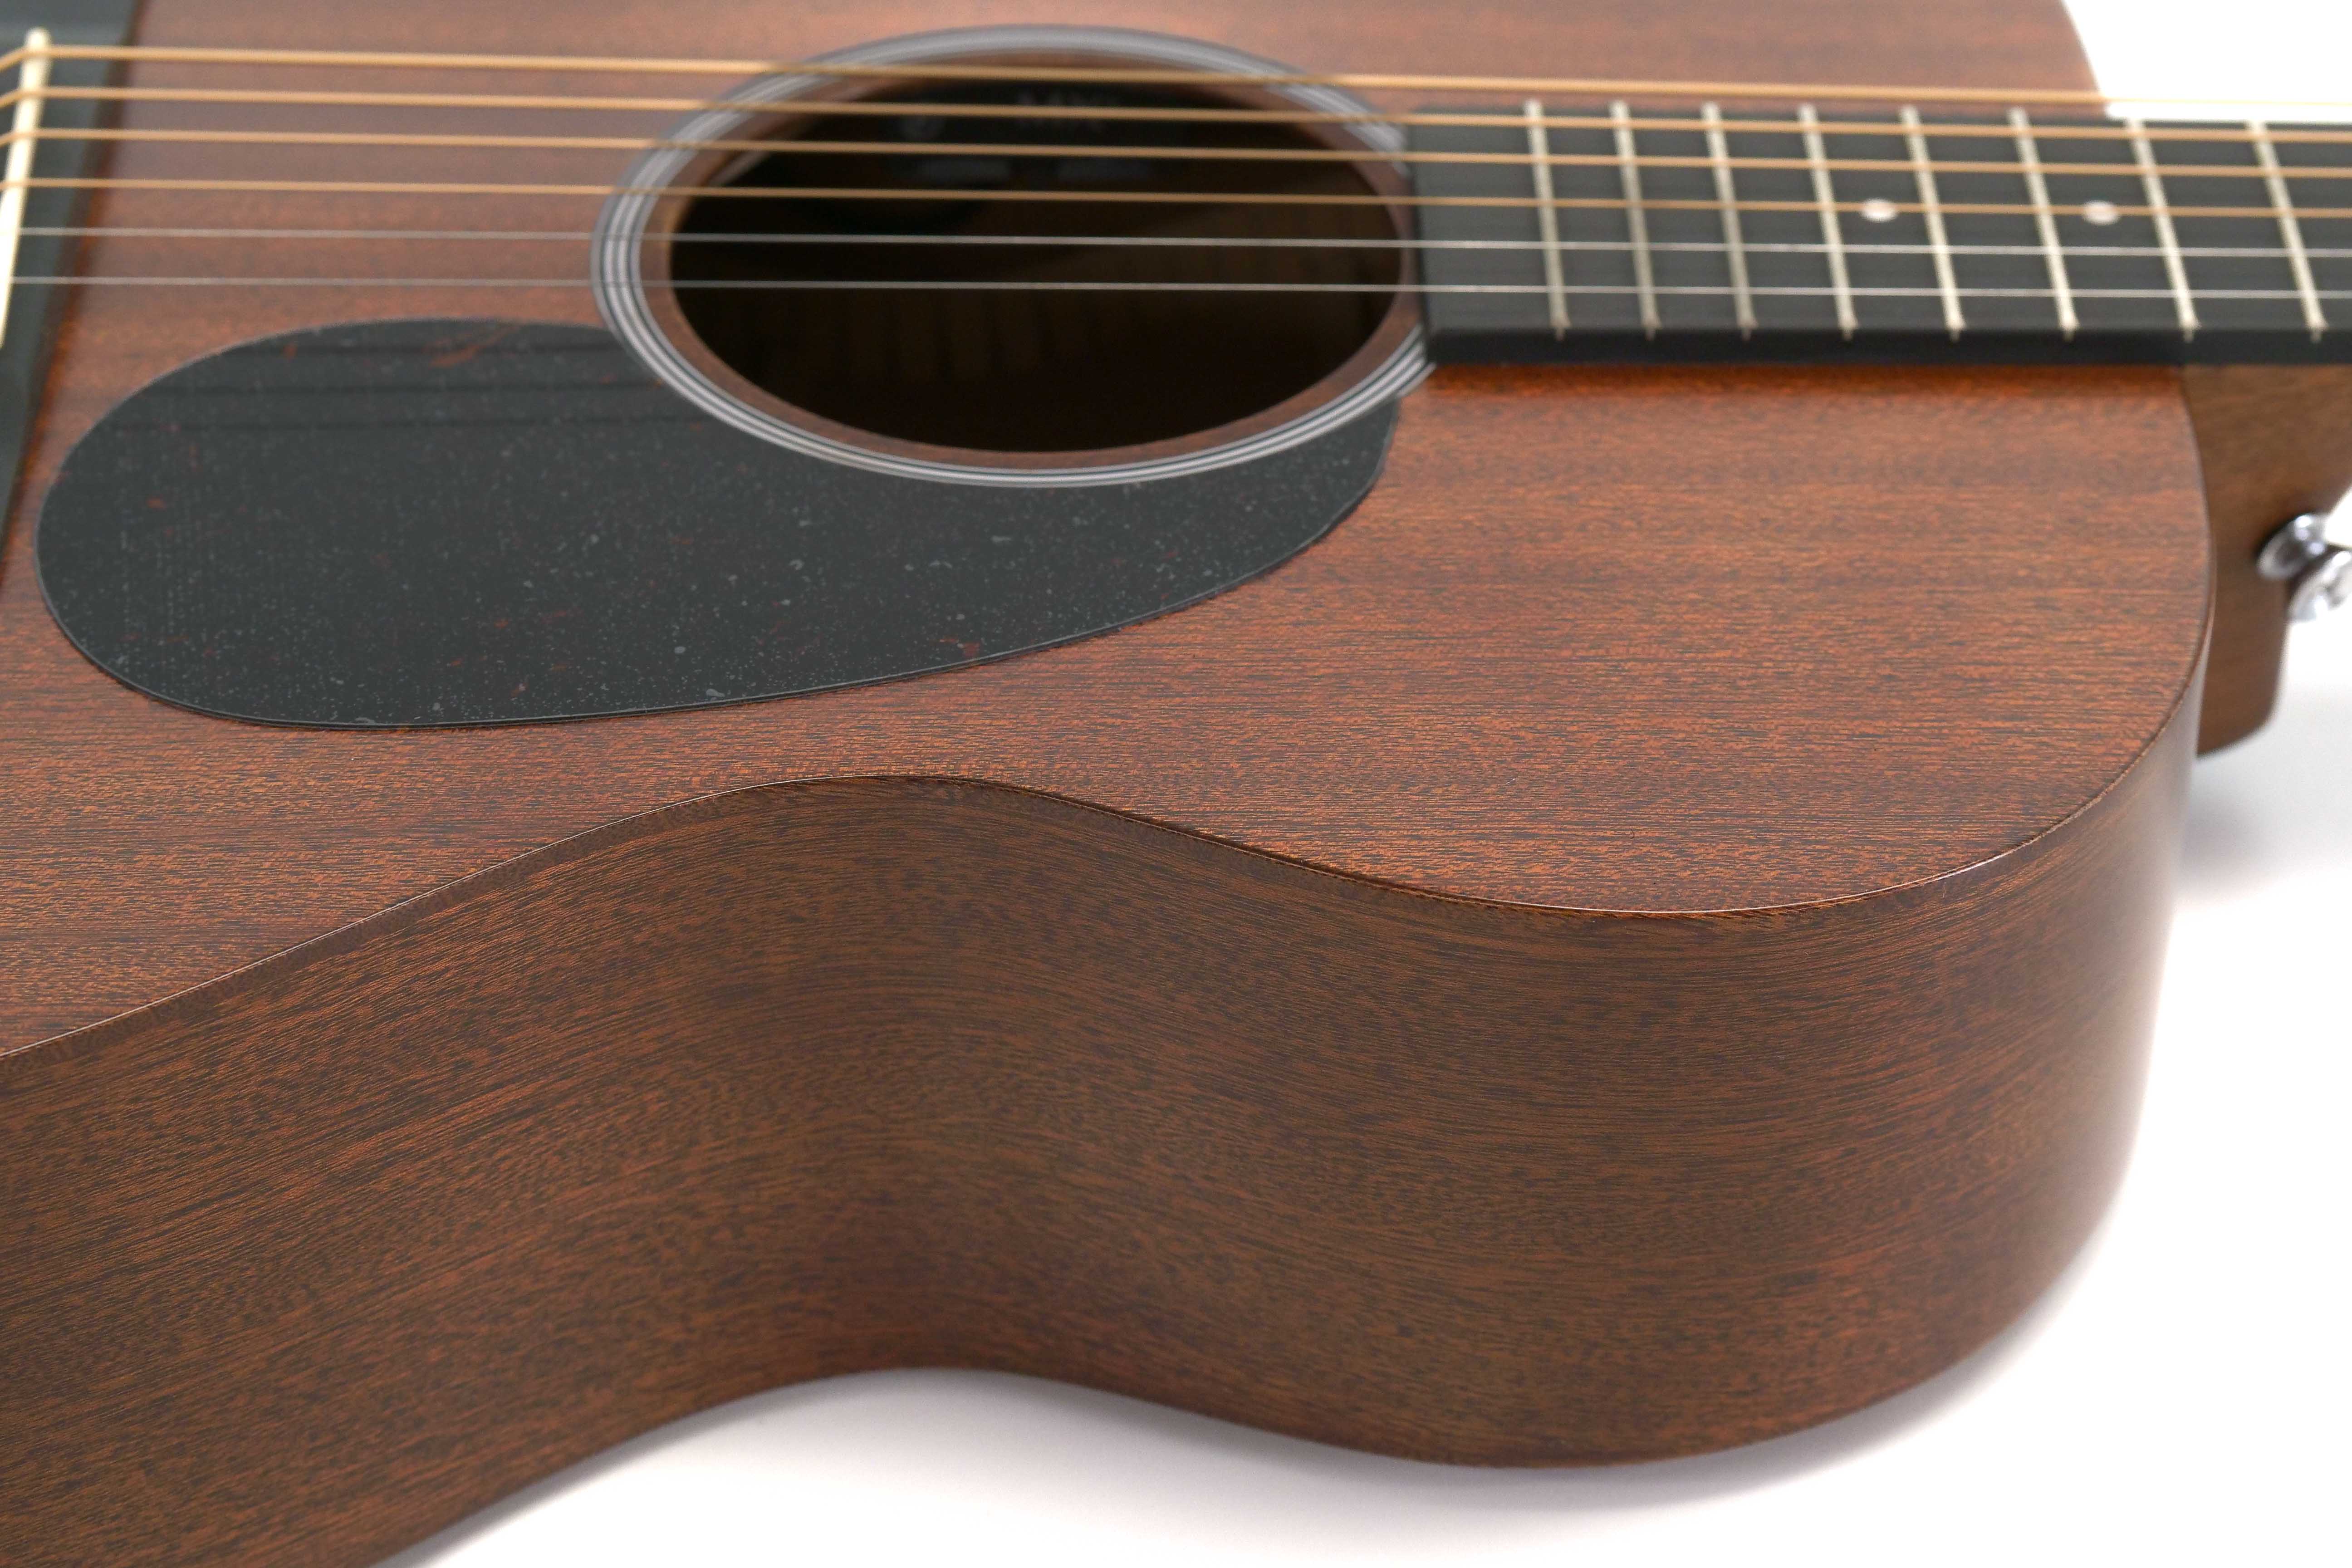 Solid wood guitar